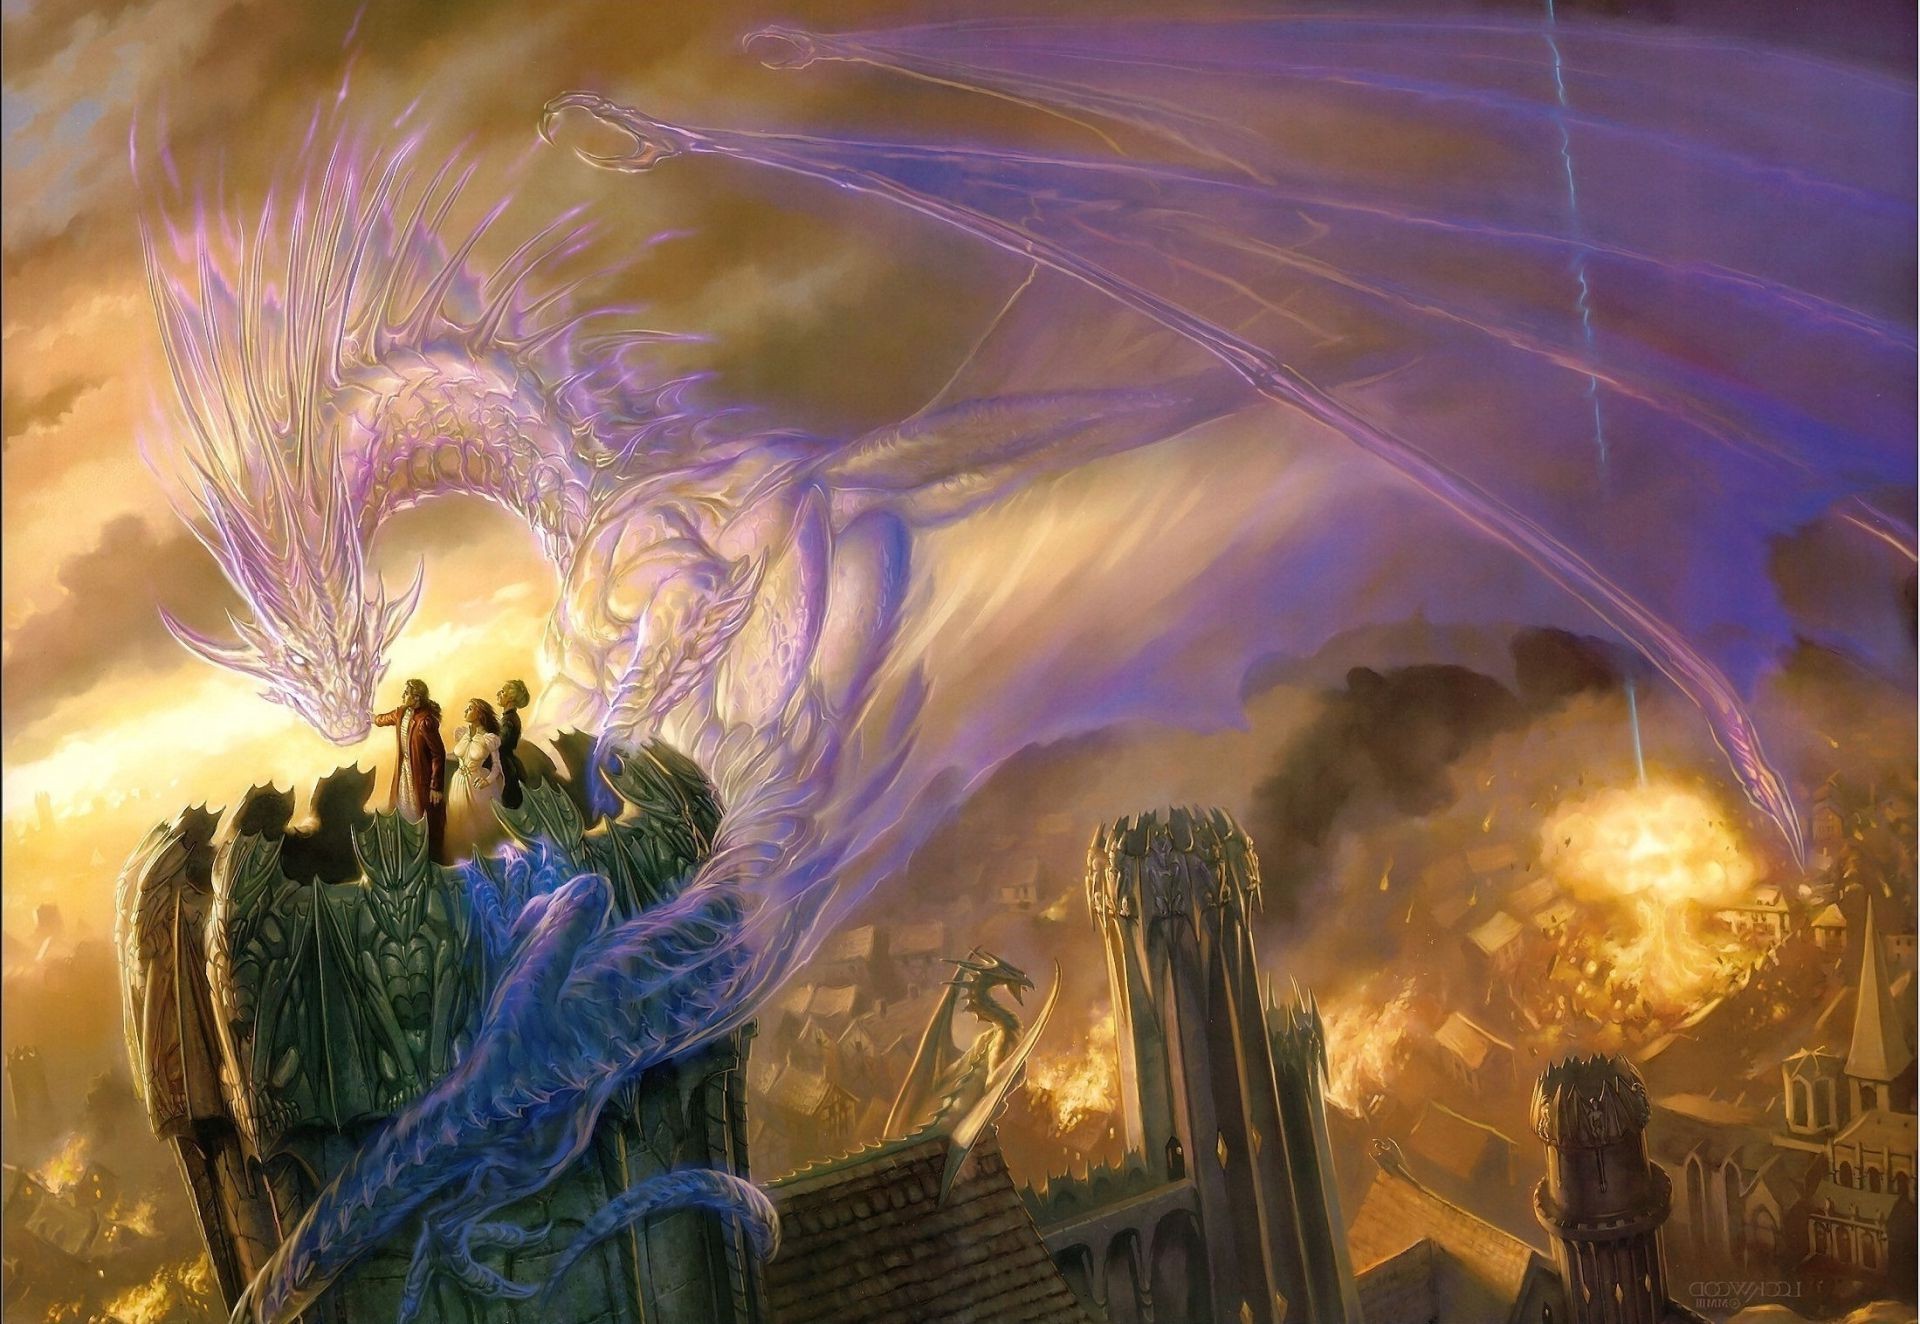 dragons light flame art abstract religion festival fantasy smoke surreal